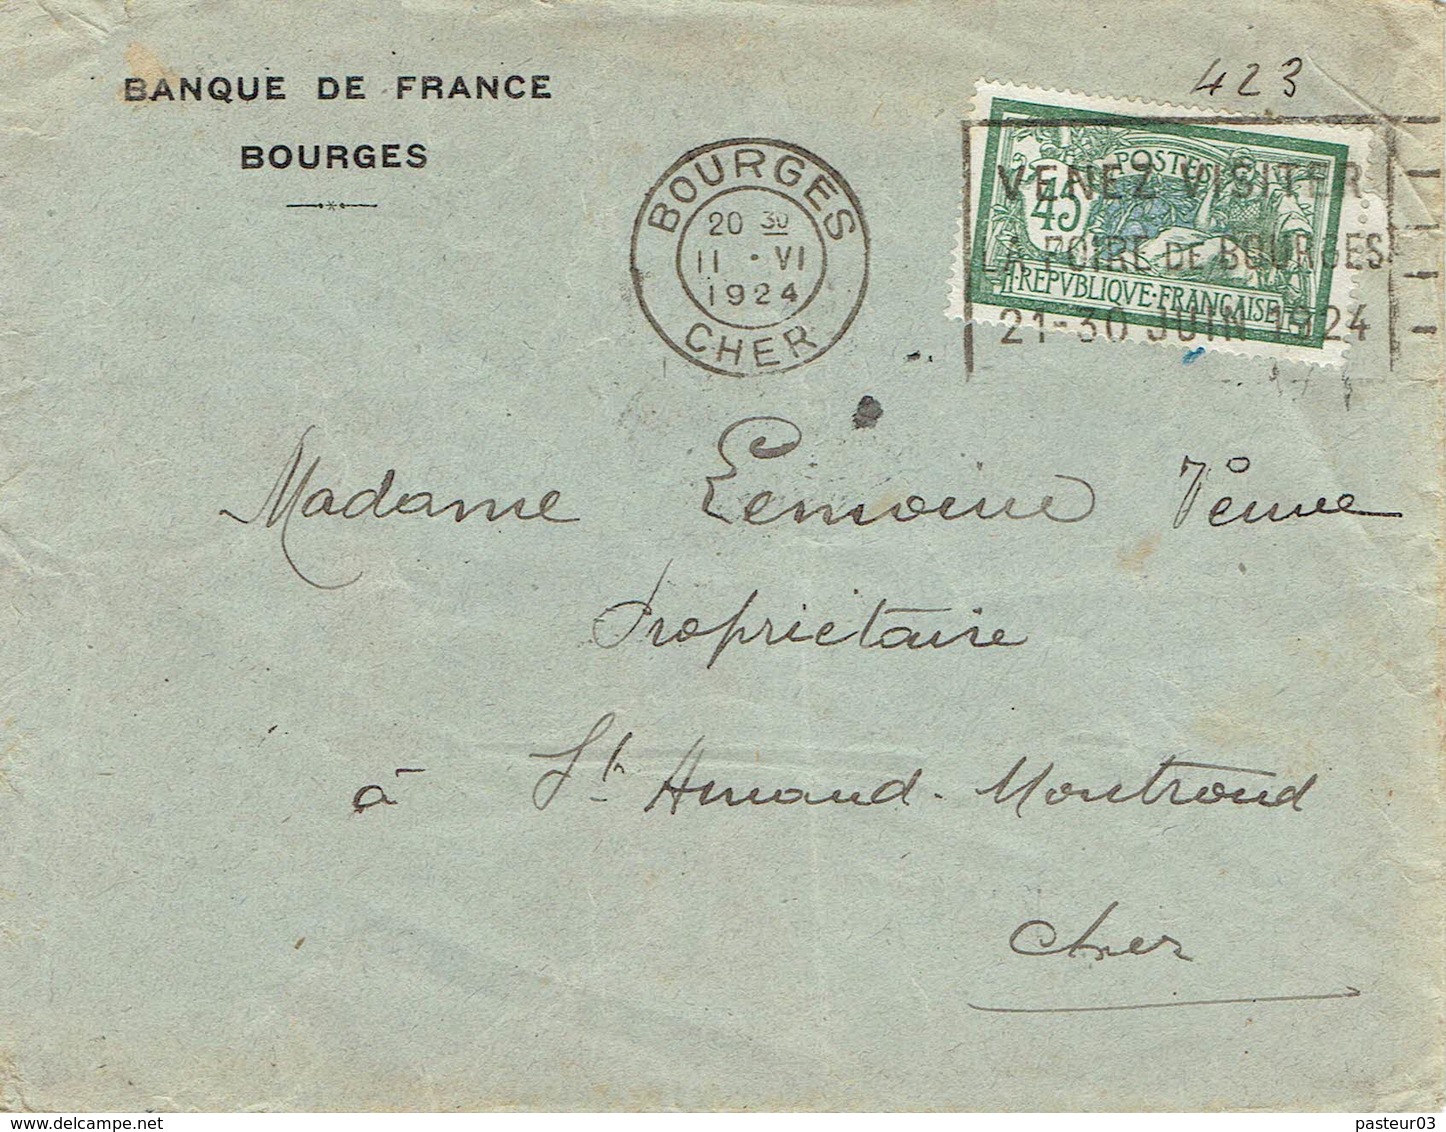 143 Mercon 45 C. Vert De Bourges 2-6-1924 - Lettres & Documents